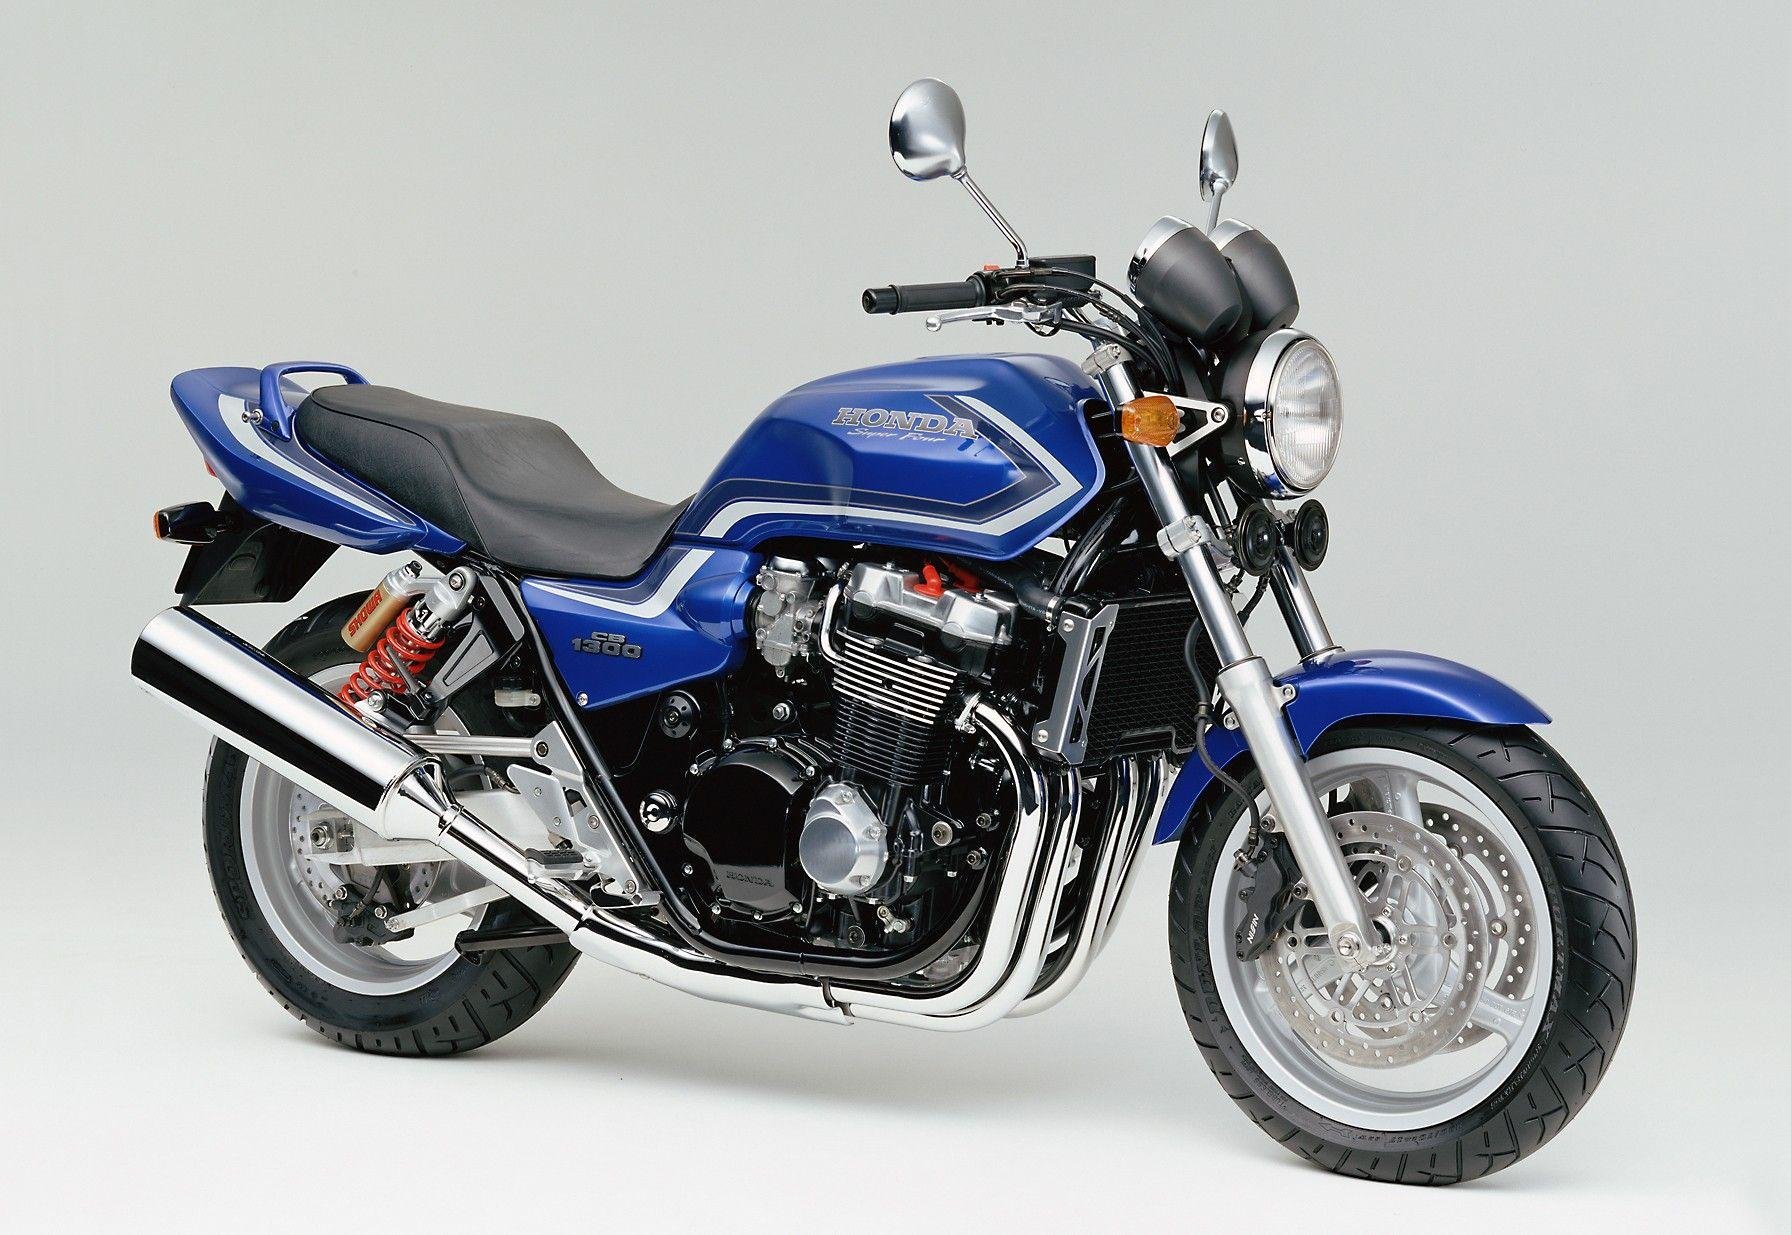 Honda 1300 мотоцикл. Honda CB 1300. Honda CB 1300 super four. Honda cb1300 1998. Honda CB 1300 1999.